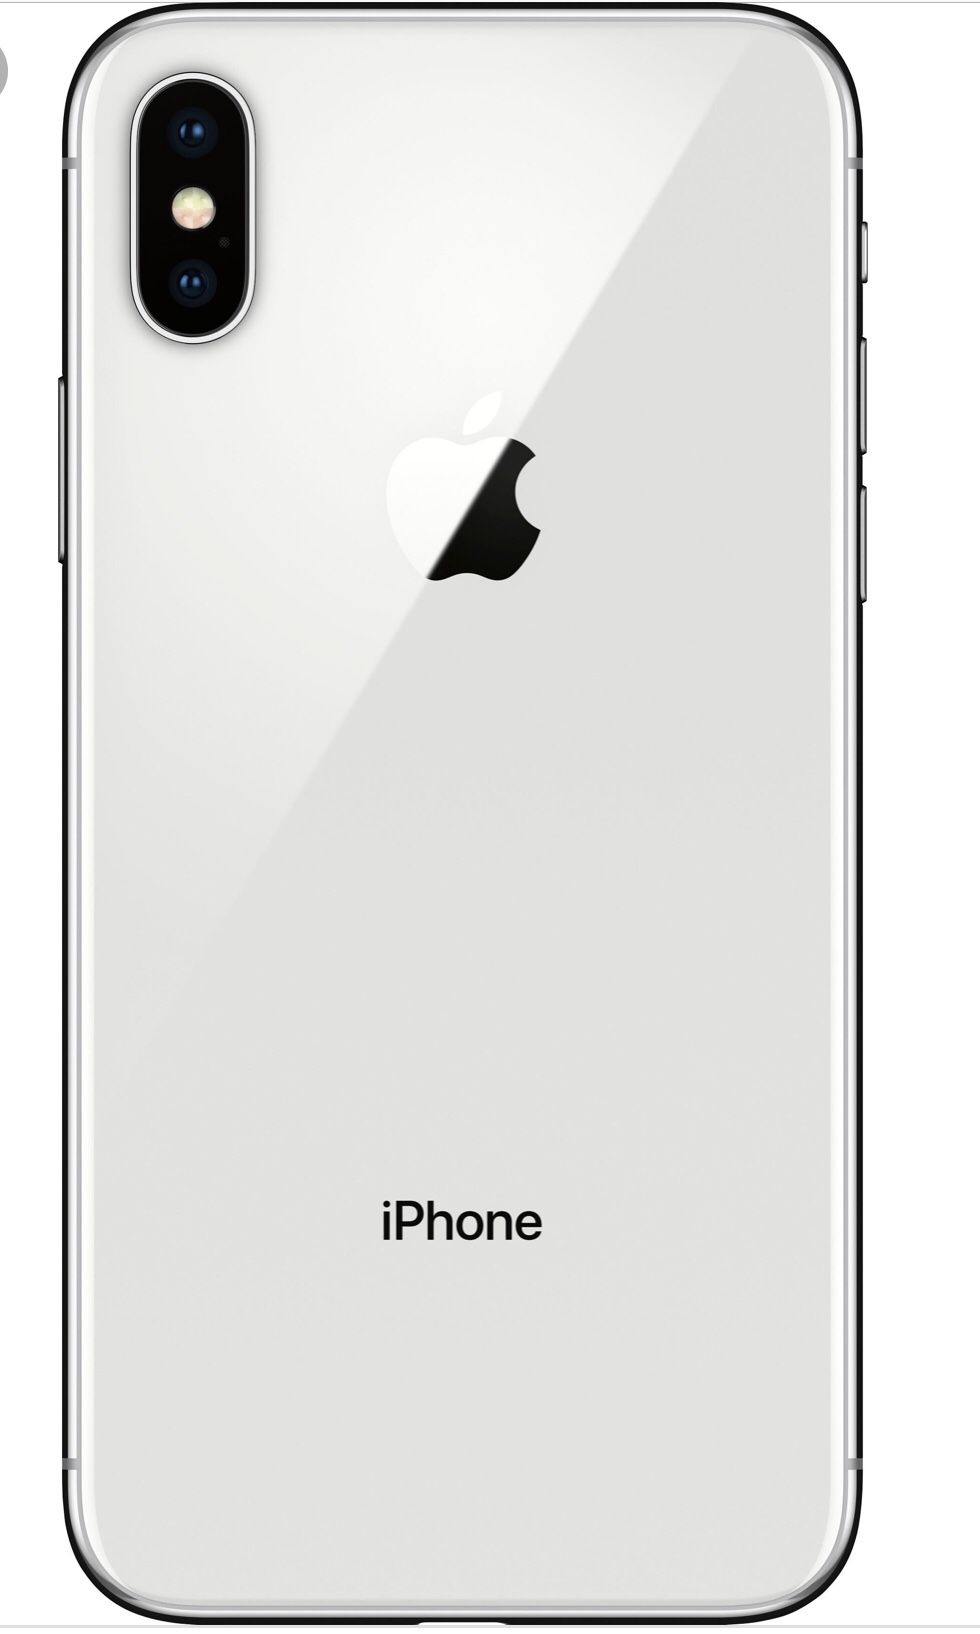 Apple iPhone X - 64GB Silver Unlocked